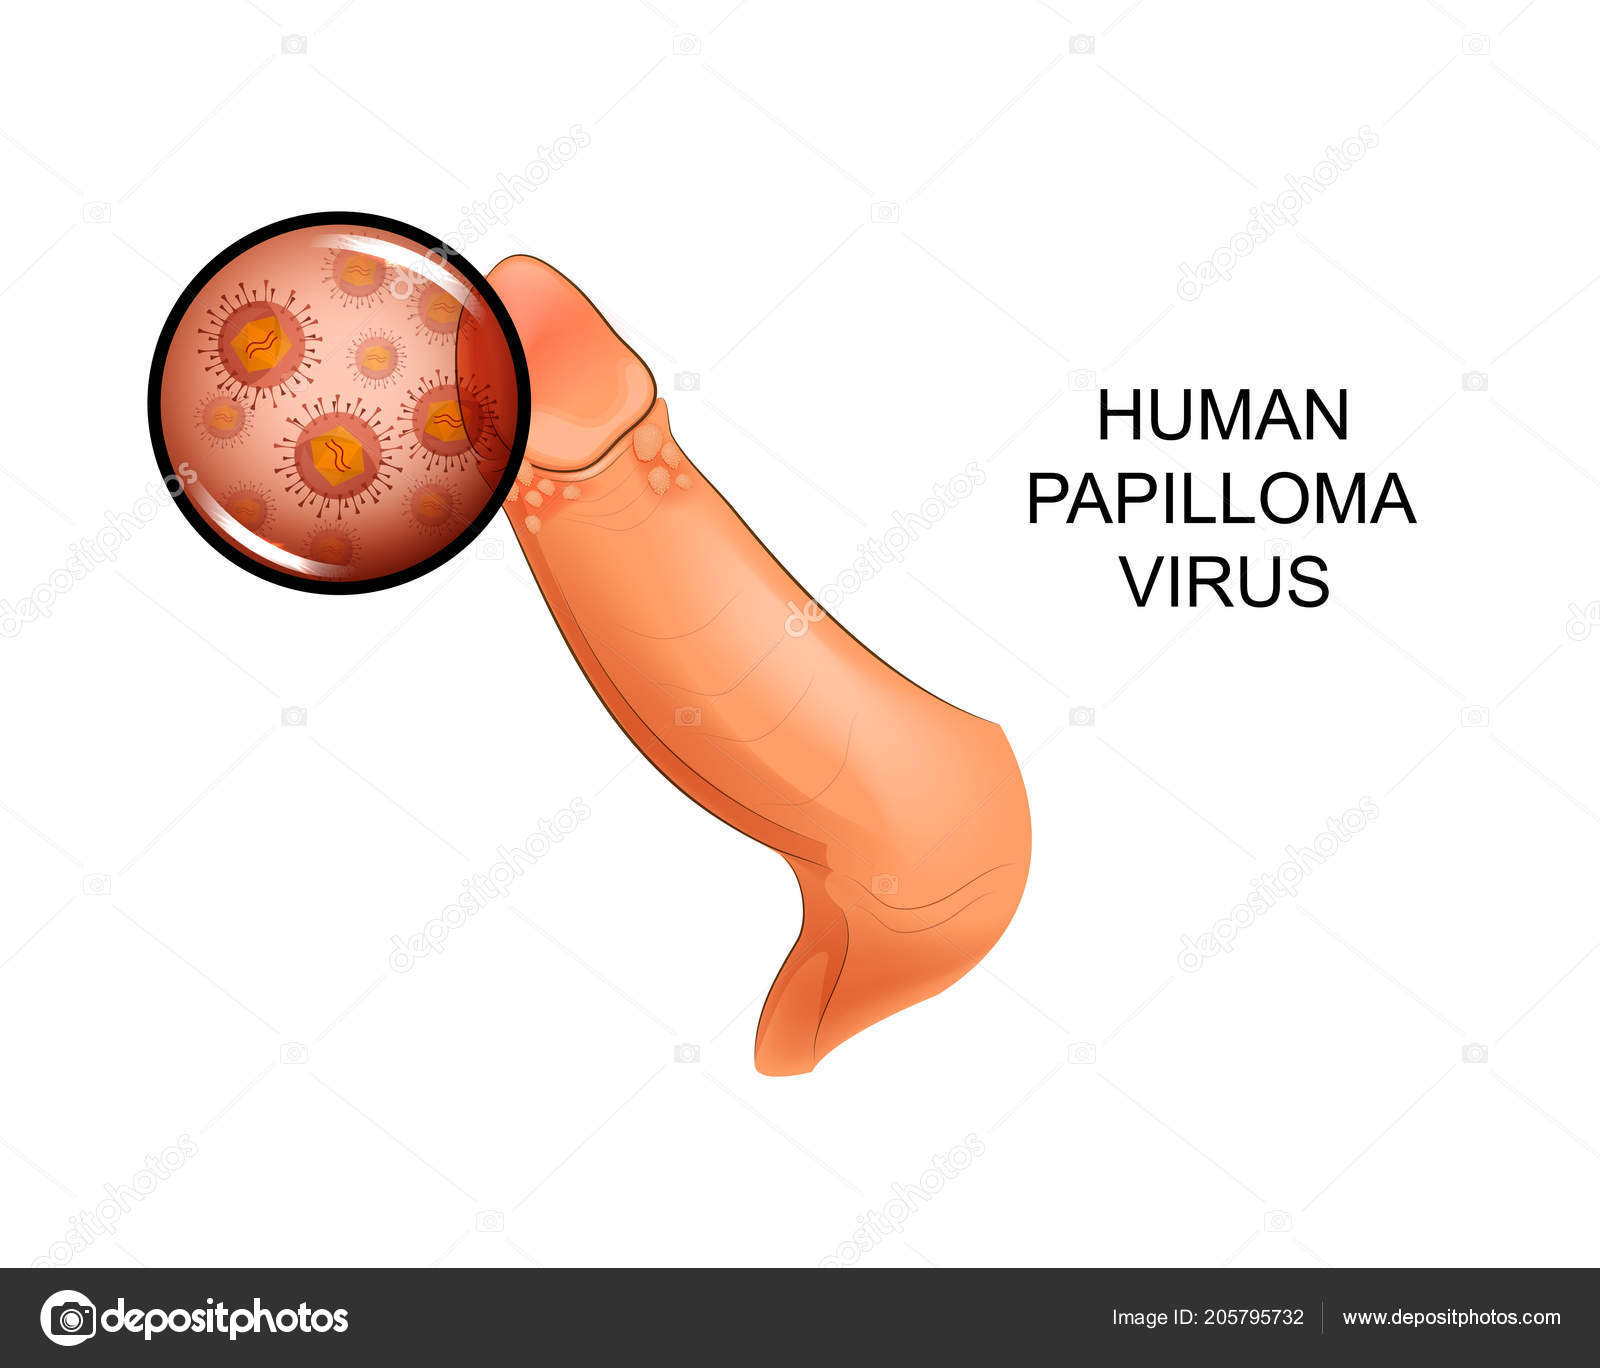 Human papillomavirus male - Human papillomavirus infection male